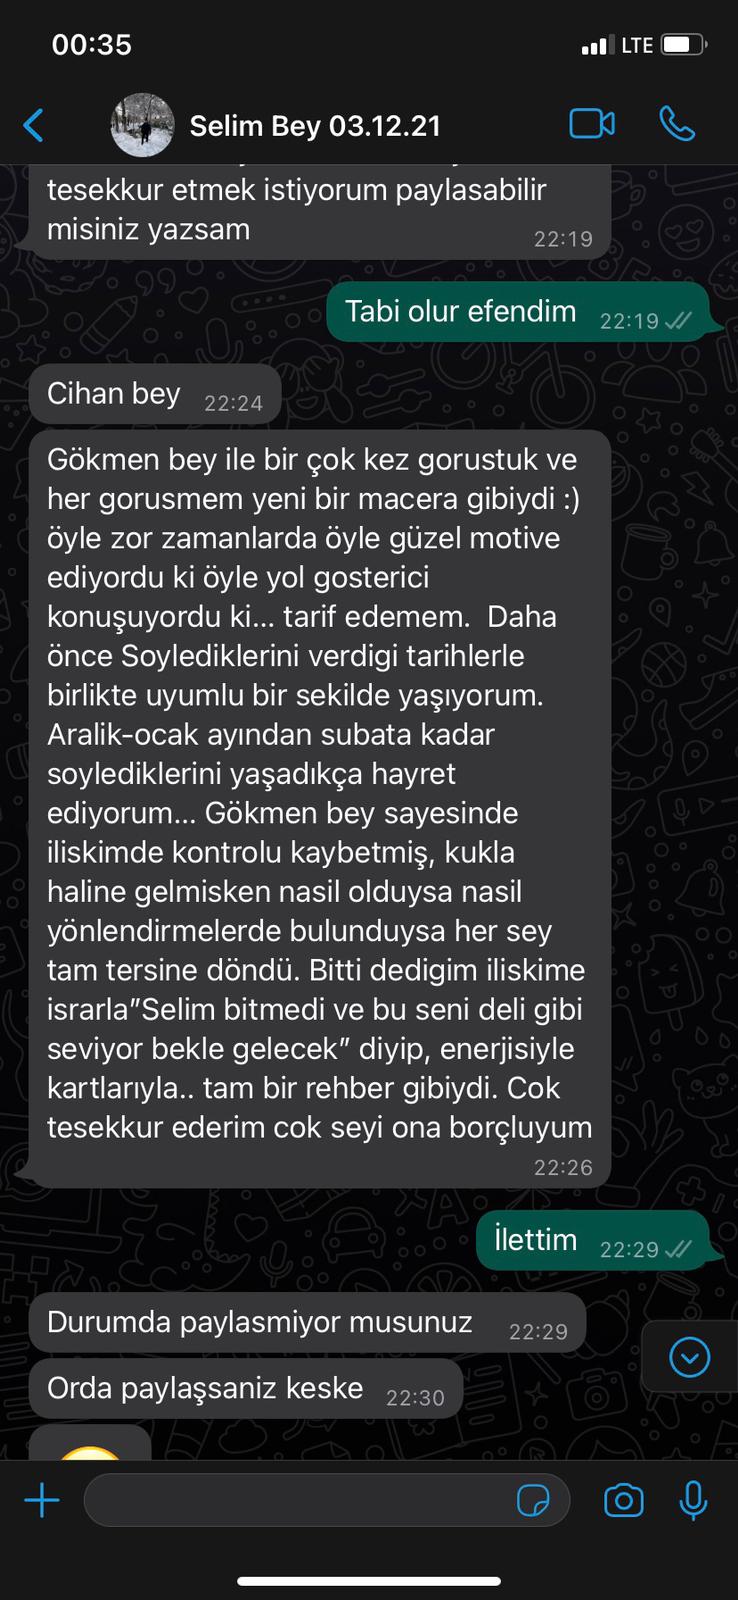 Selim Bey 